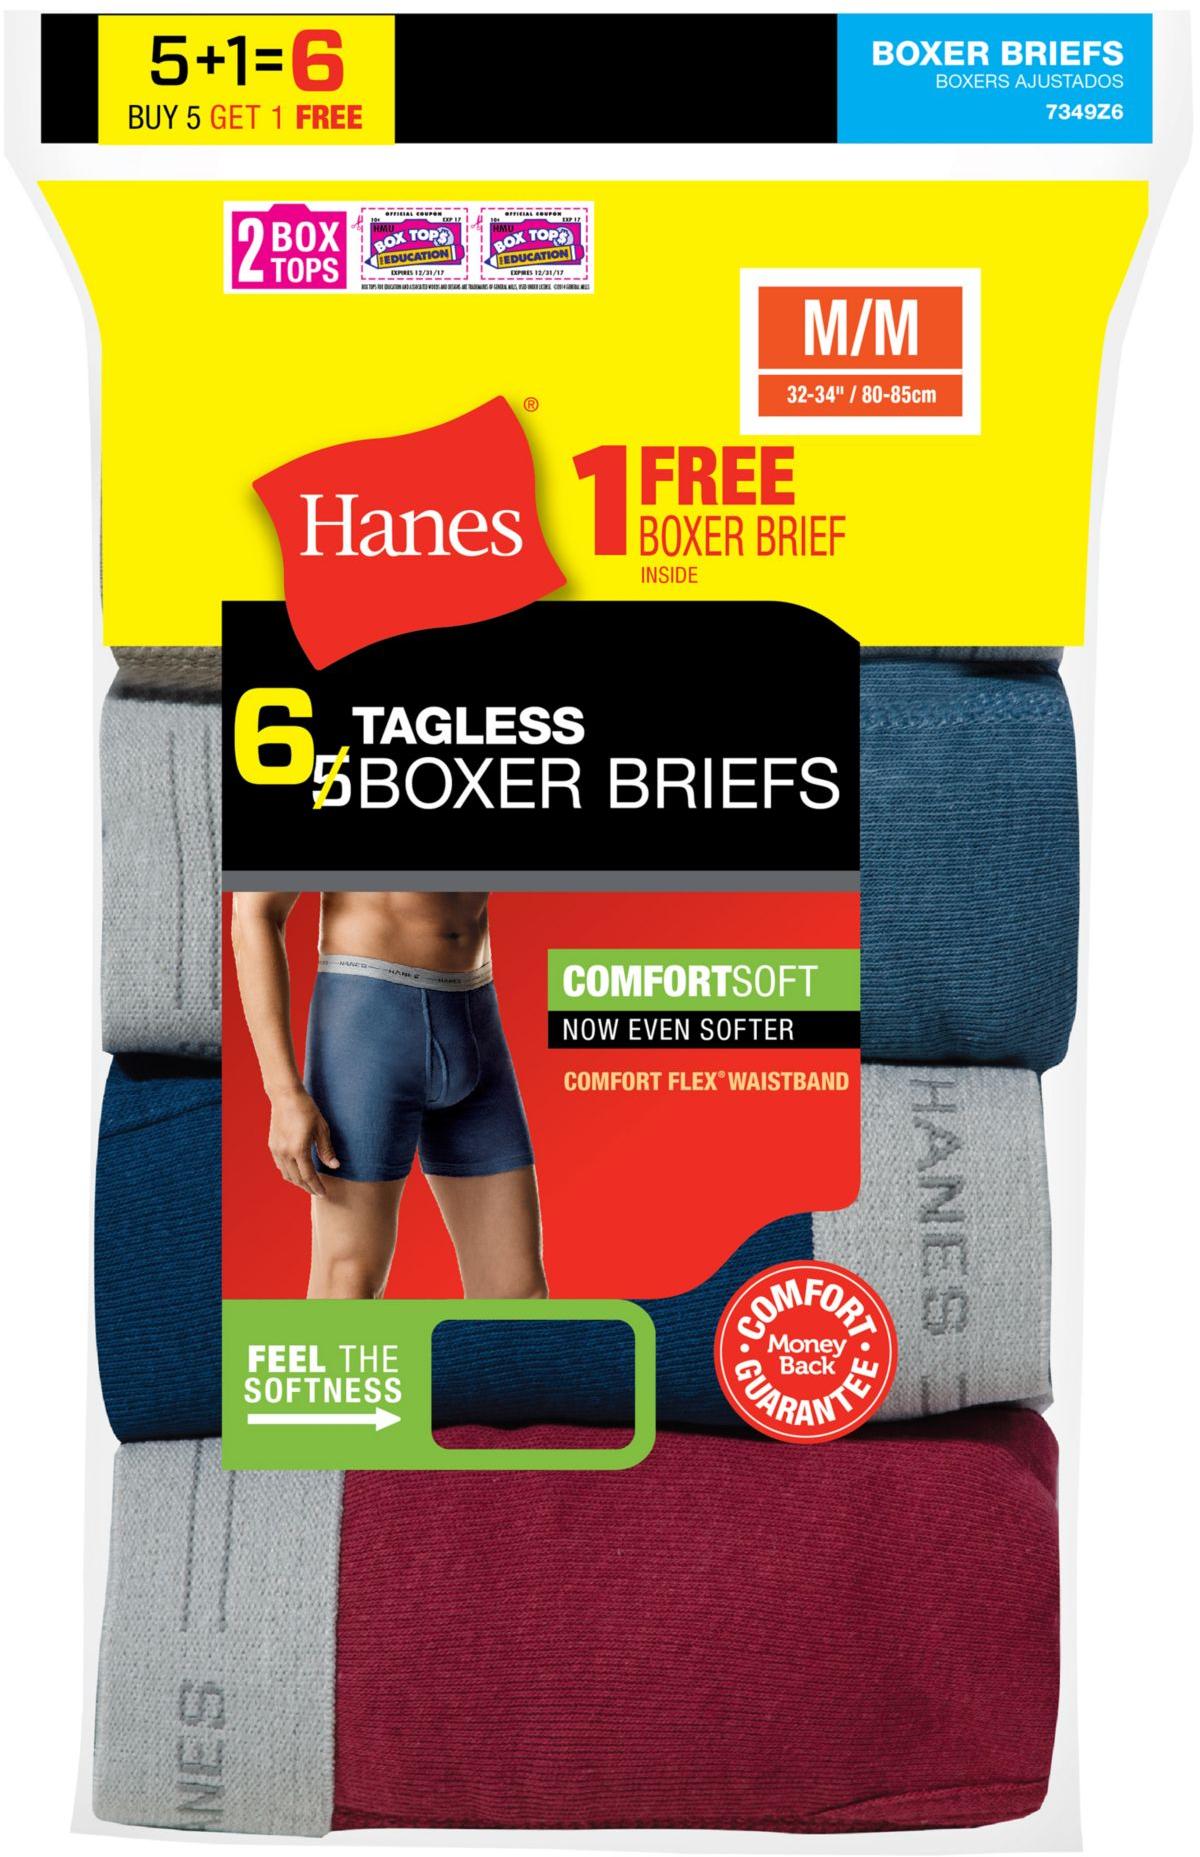 HANES Men's TAGLESS Boxer Briefs Comfort Flex Waistband 6 Pack - 7349Z6 ...